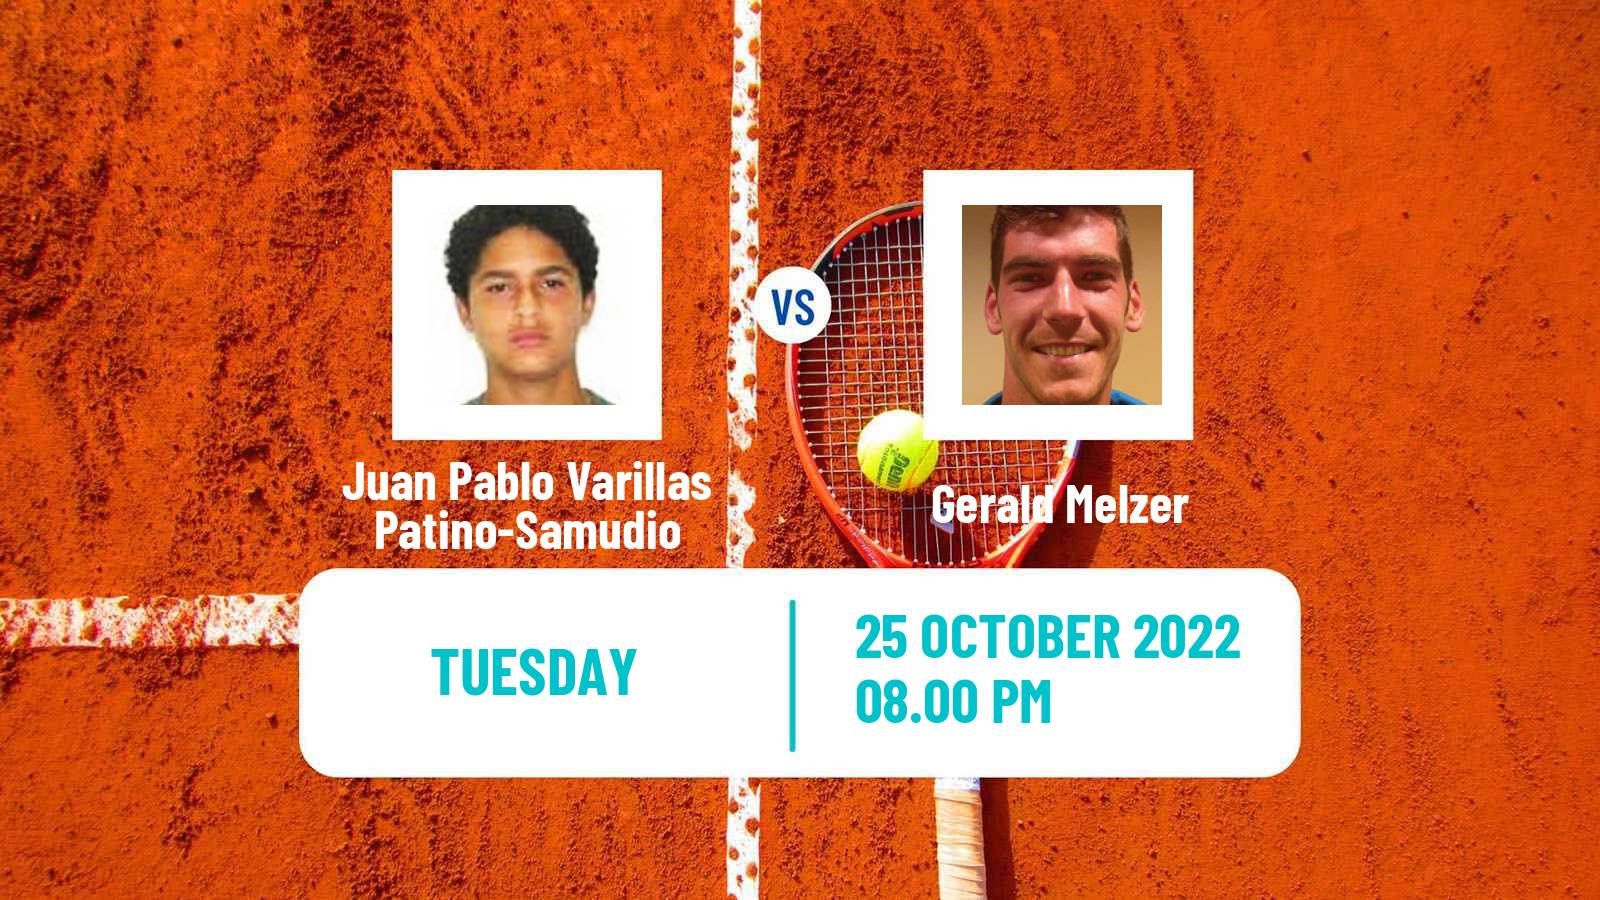 Tennis ATP Challenger Juan Pablo Varillas Patino-Samudio - Gerald Melzer